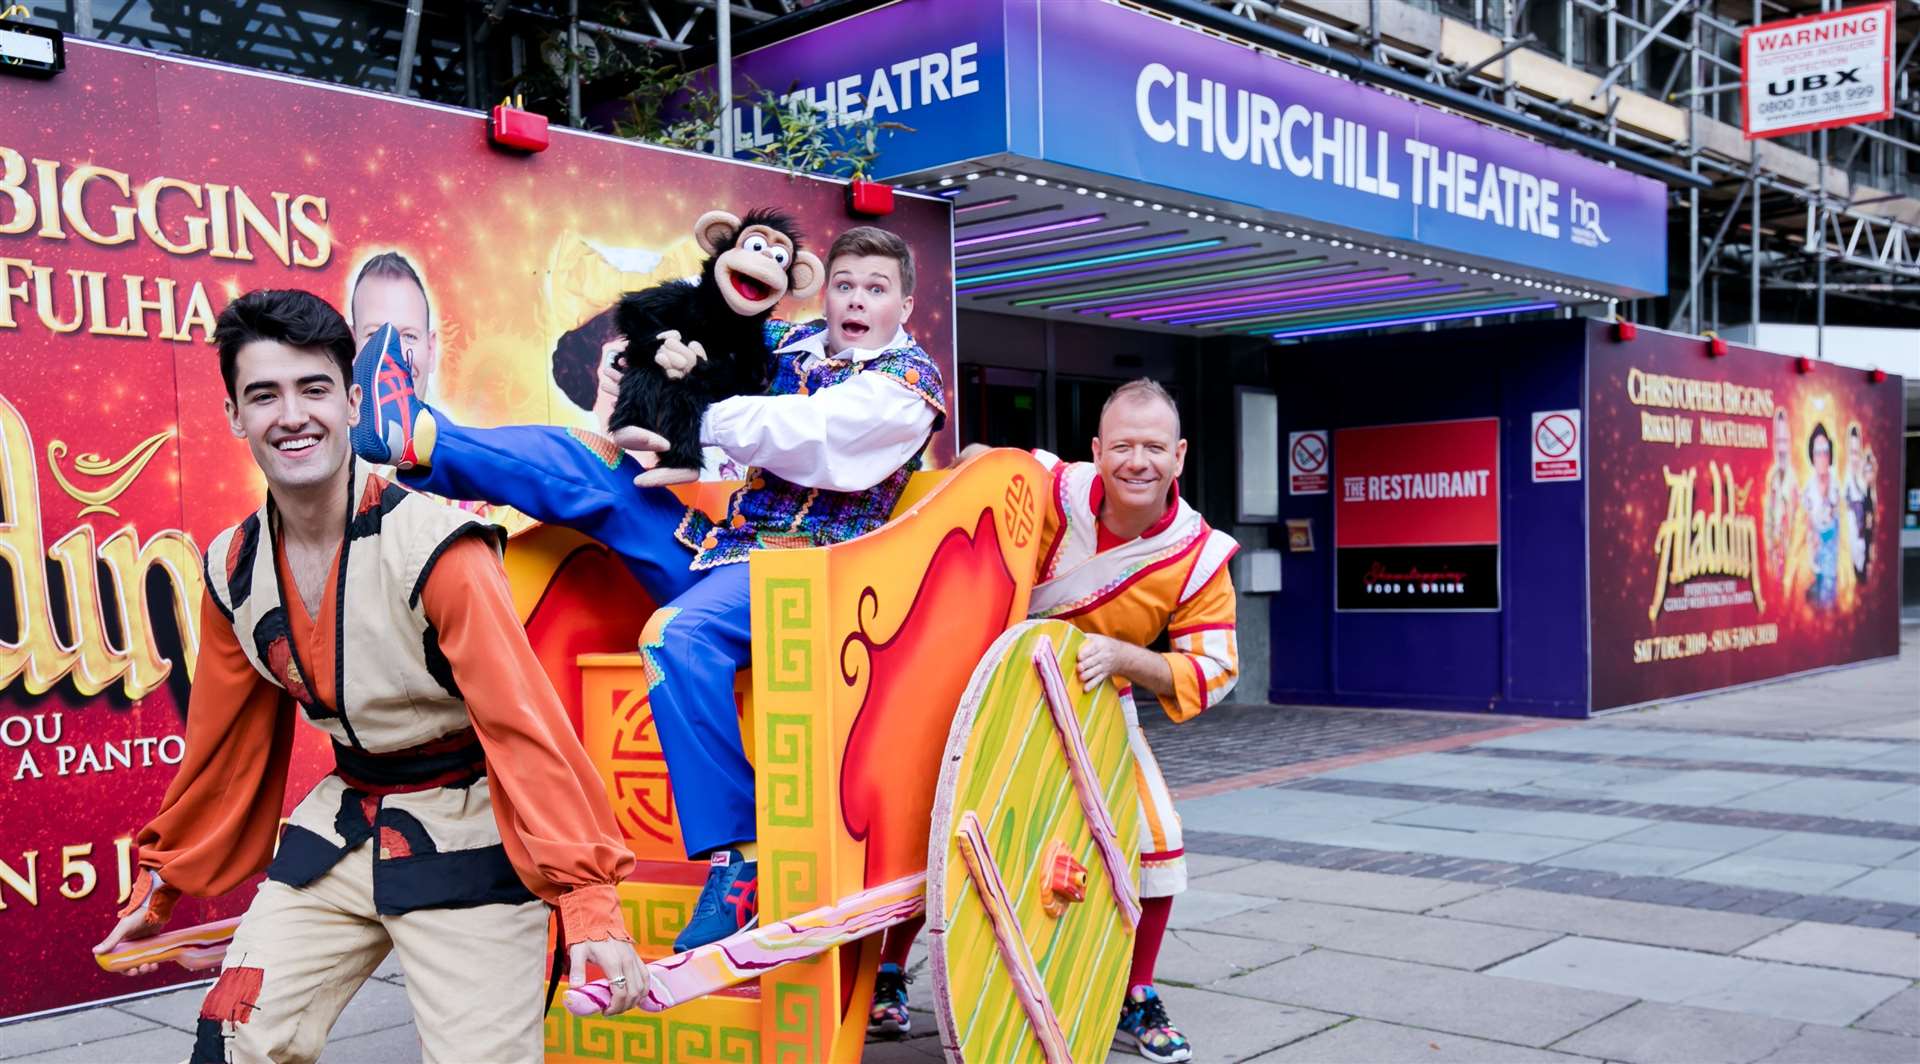 Last year's launch of Aladdin at the Churchill Theatre